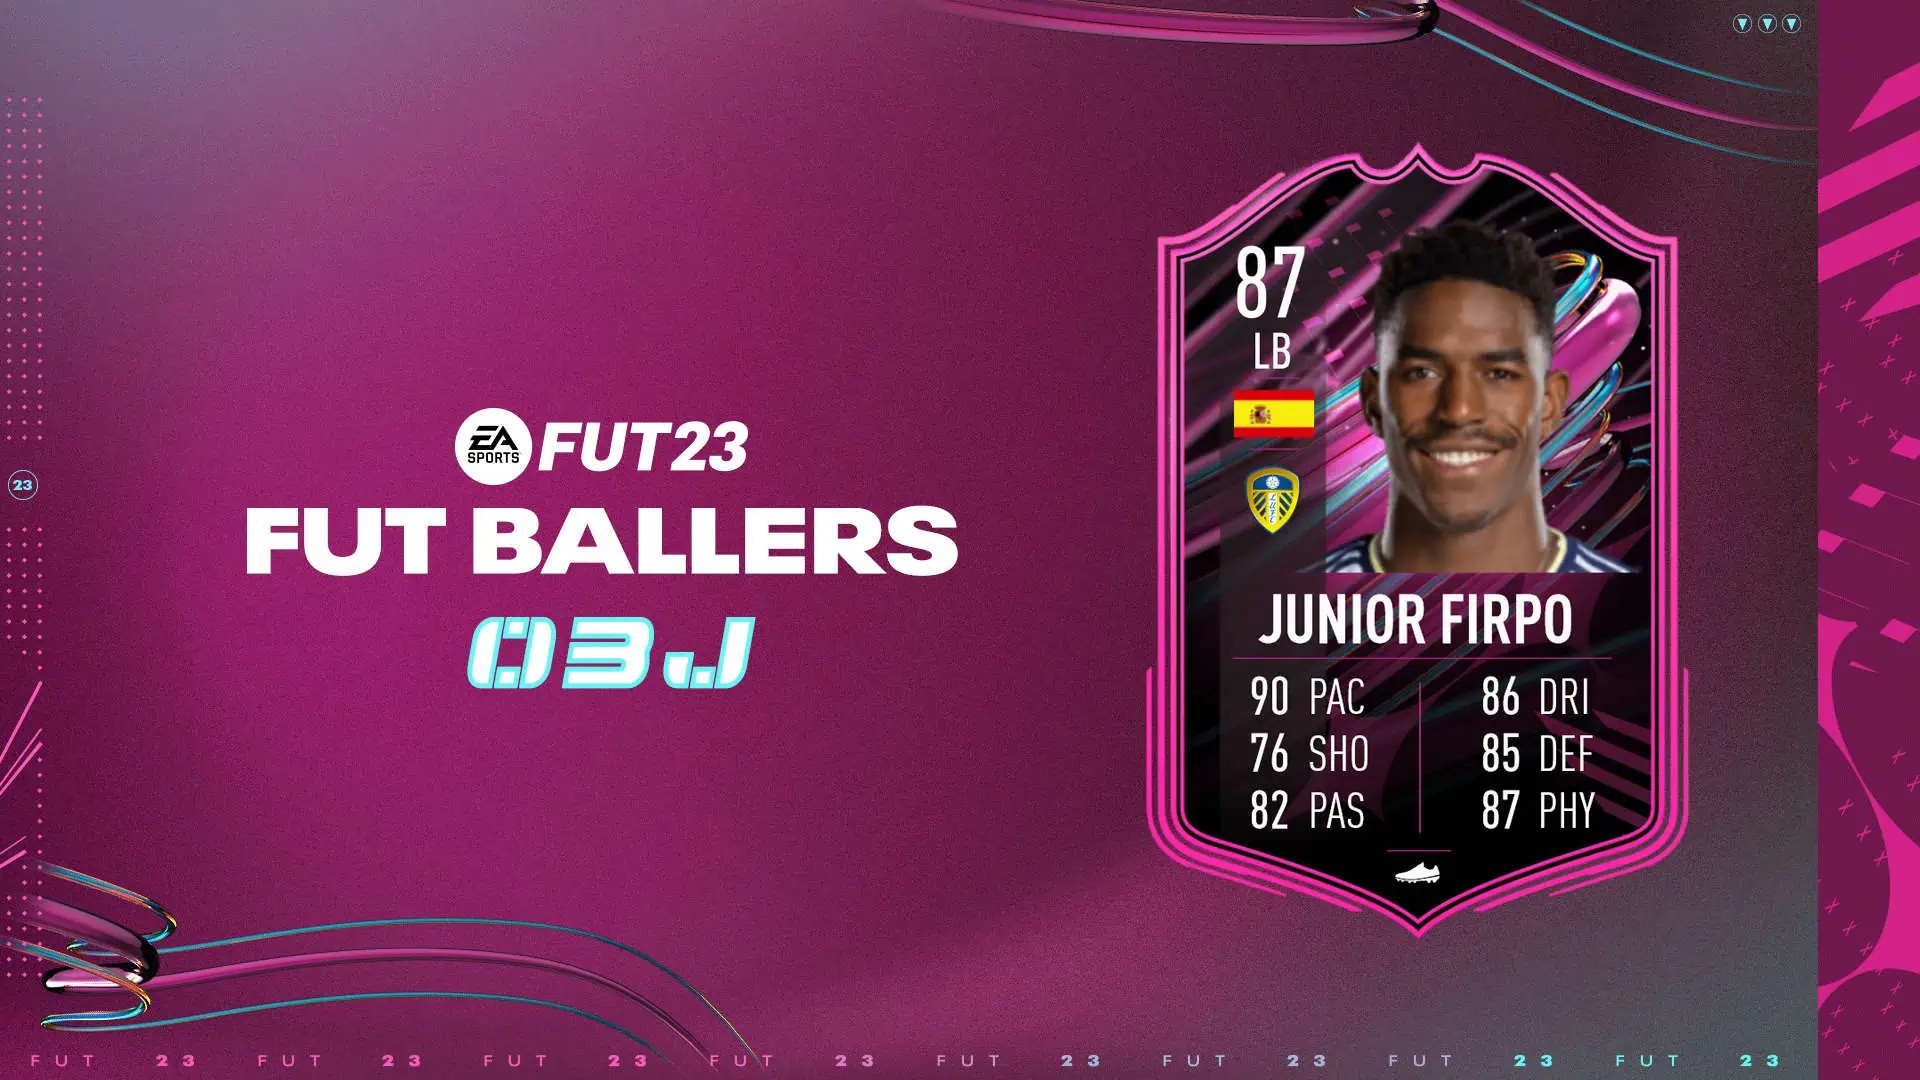 FIFA 23: Junior Firpo Objectives of the FUT Ballers Campaign